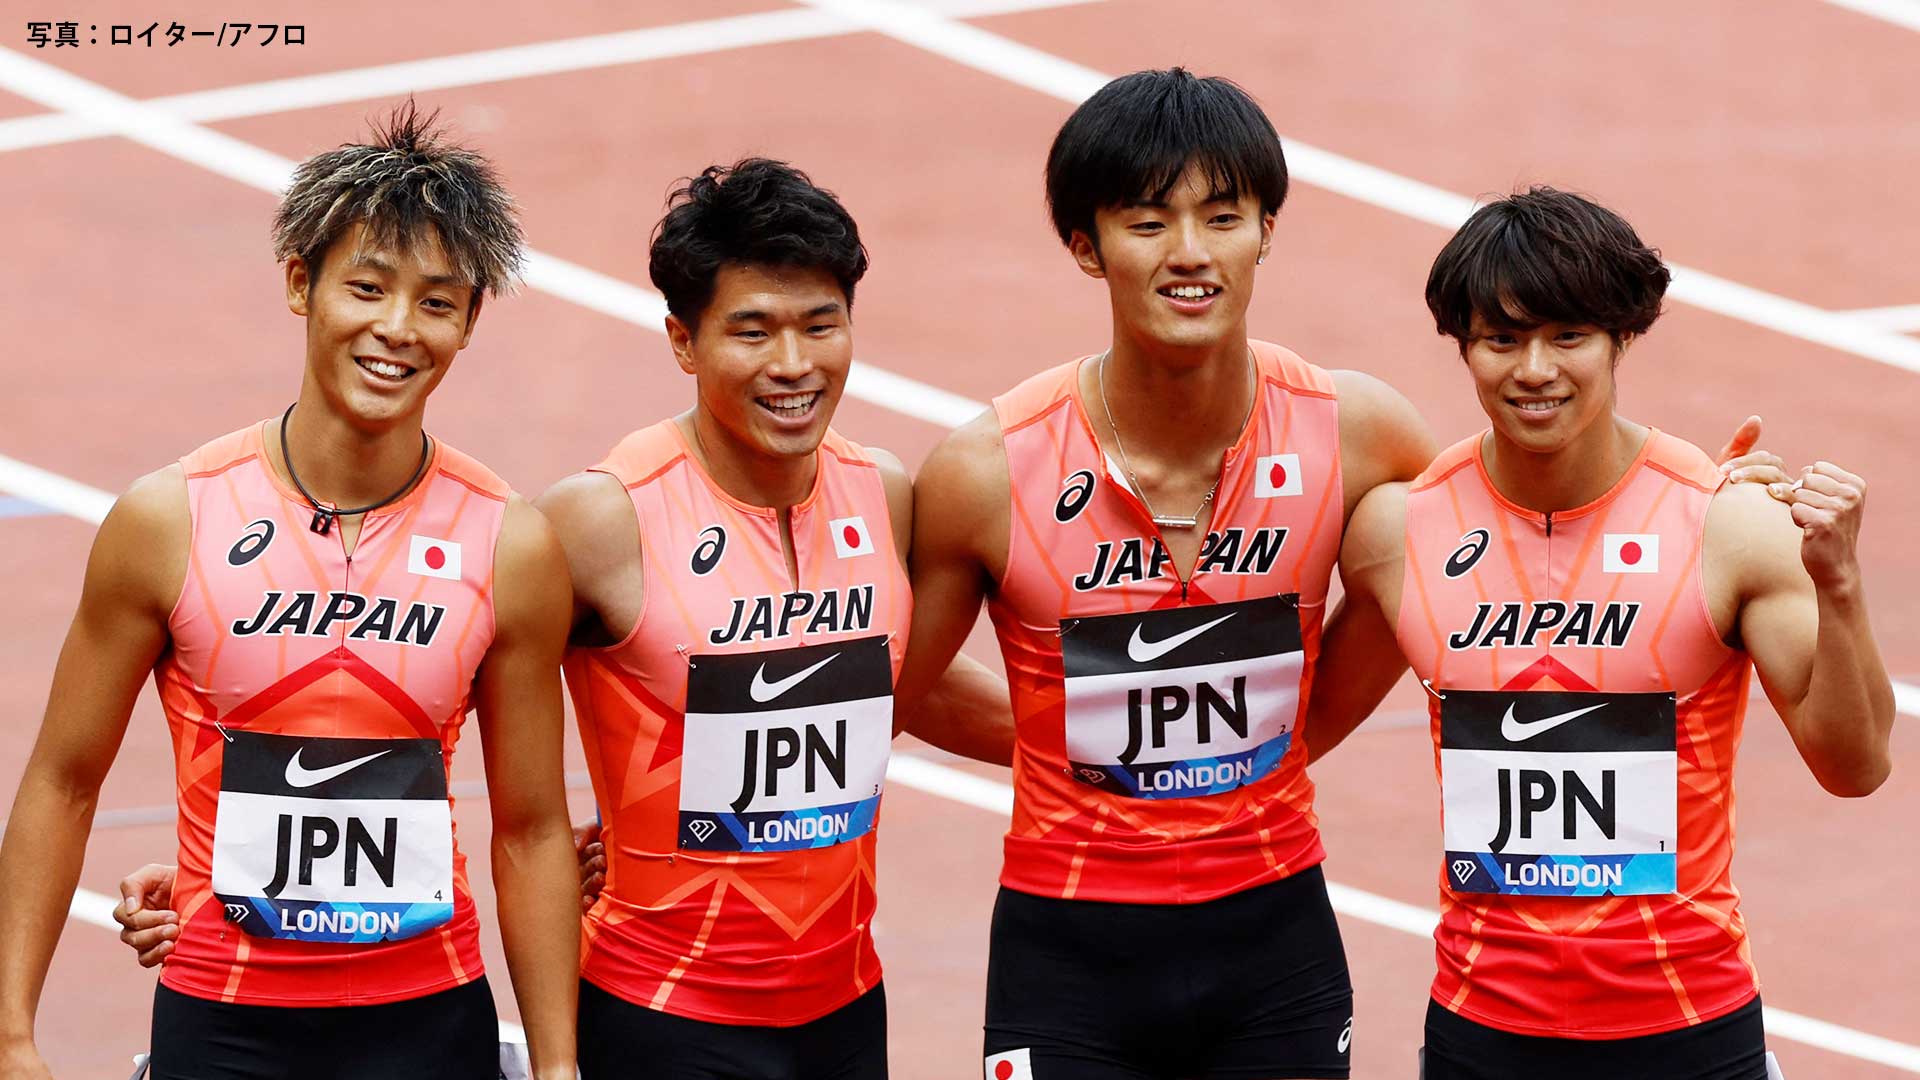 4×100mリレーで日本が37秒80の今季世界最高タイ 世界陸上ブダペスト出場ほぼ確実に【DLロンドン】 | TBS NEWS DIG